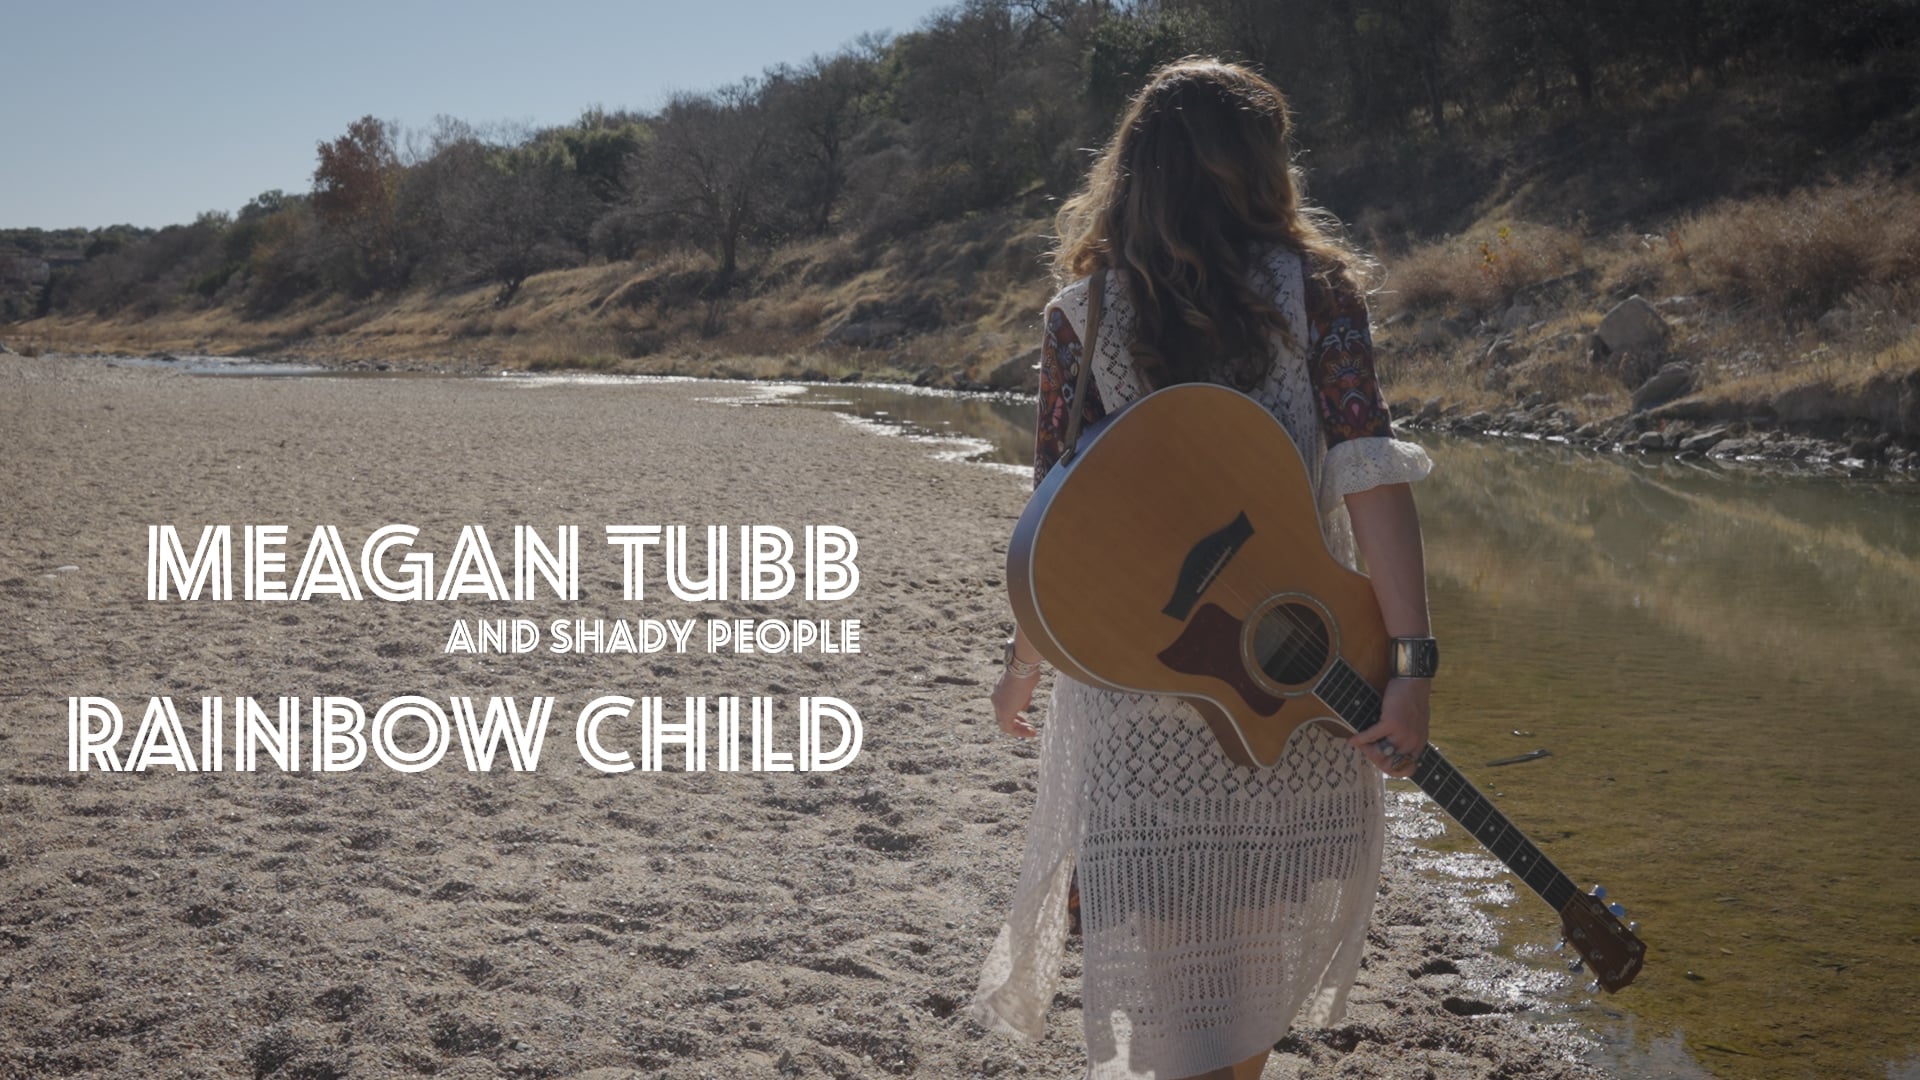 Meagan Tubb and Shady People - "Rainbow Child"